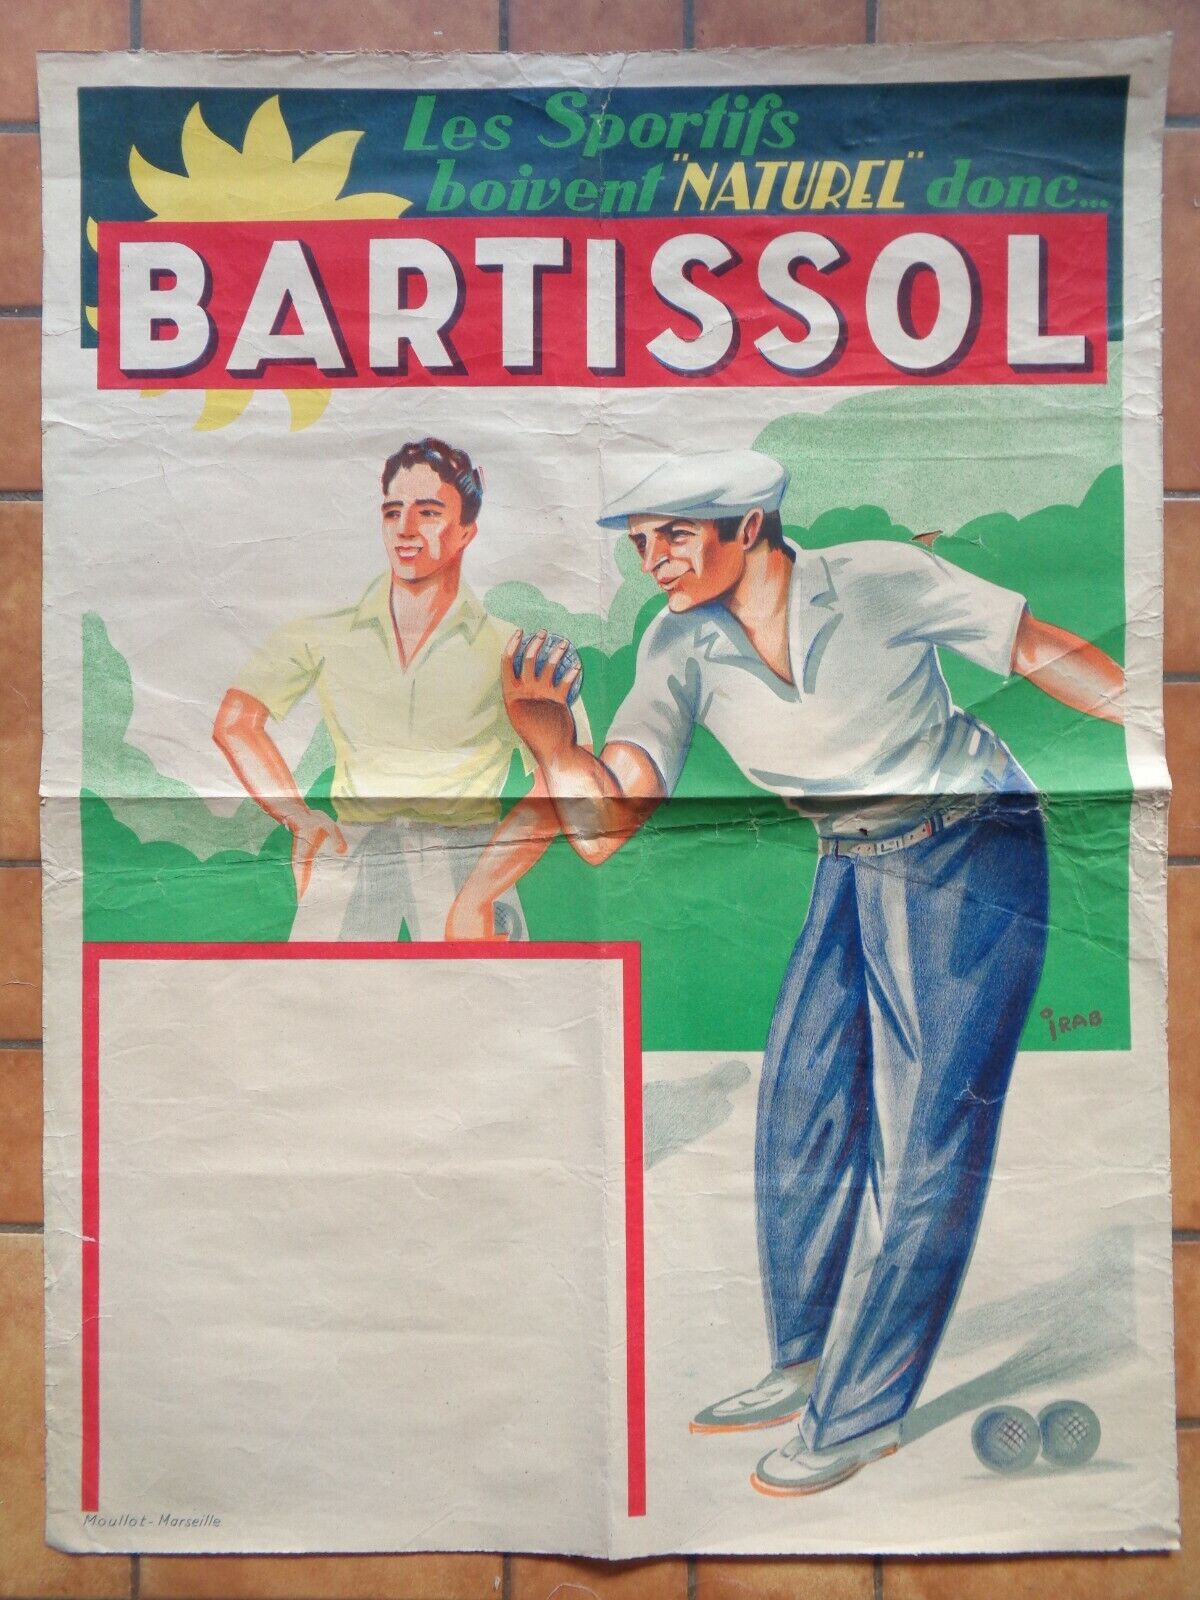 ANTIQUE PETANQUE BARTISSOL ADVERTISING POSTER Irab Marseille Alcohol Poster